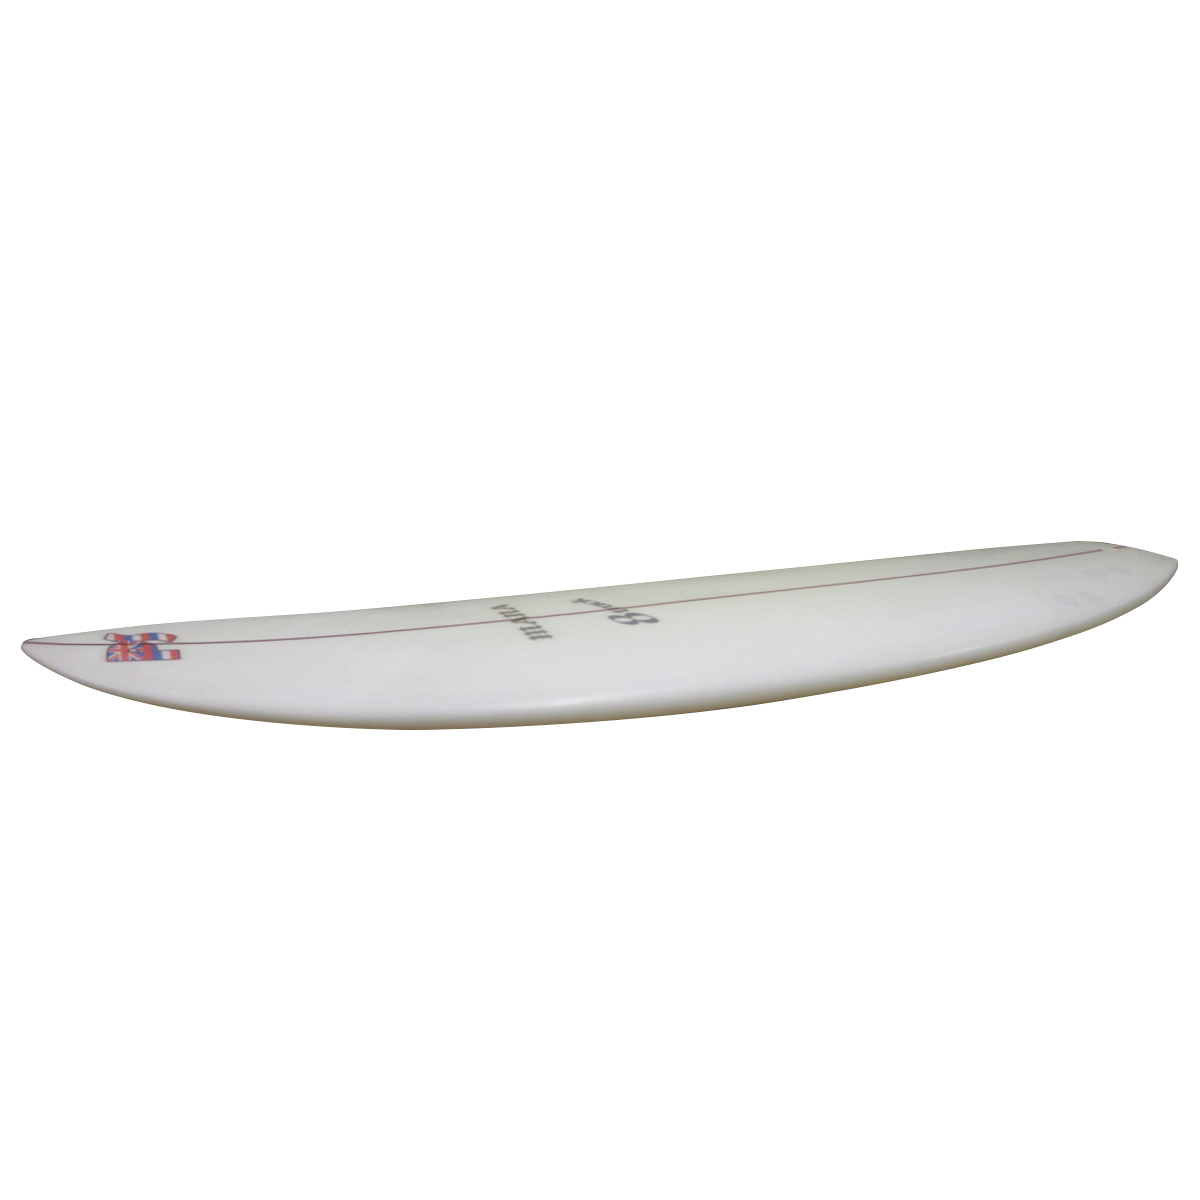 Mana Surfboards / Custom 5`10